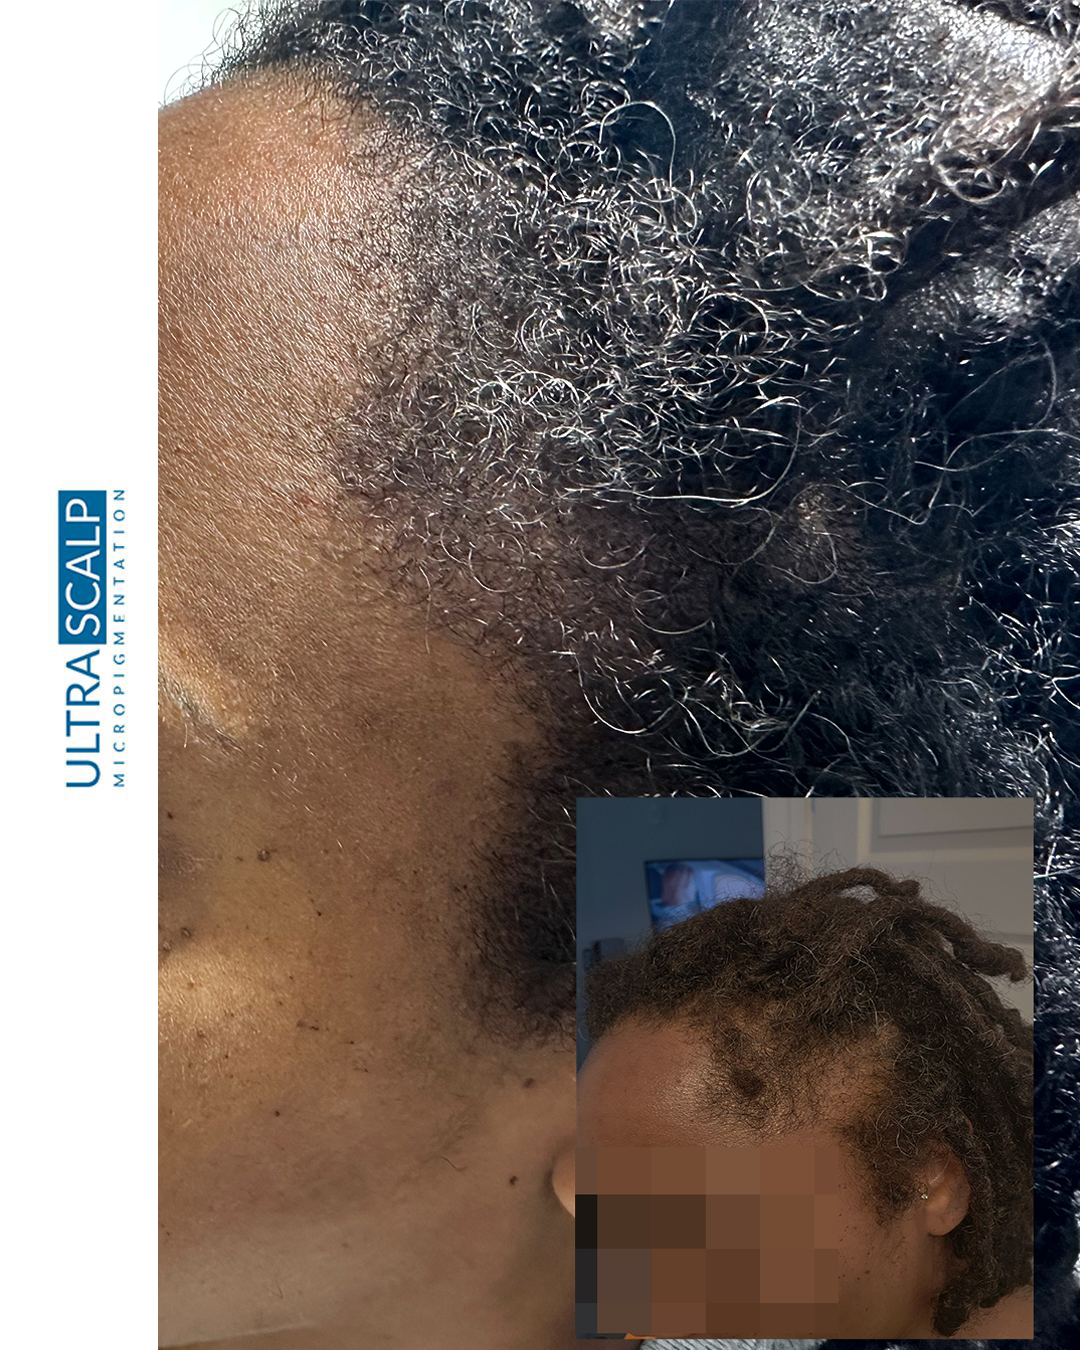 scalp micropigmentation for alopecia